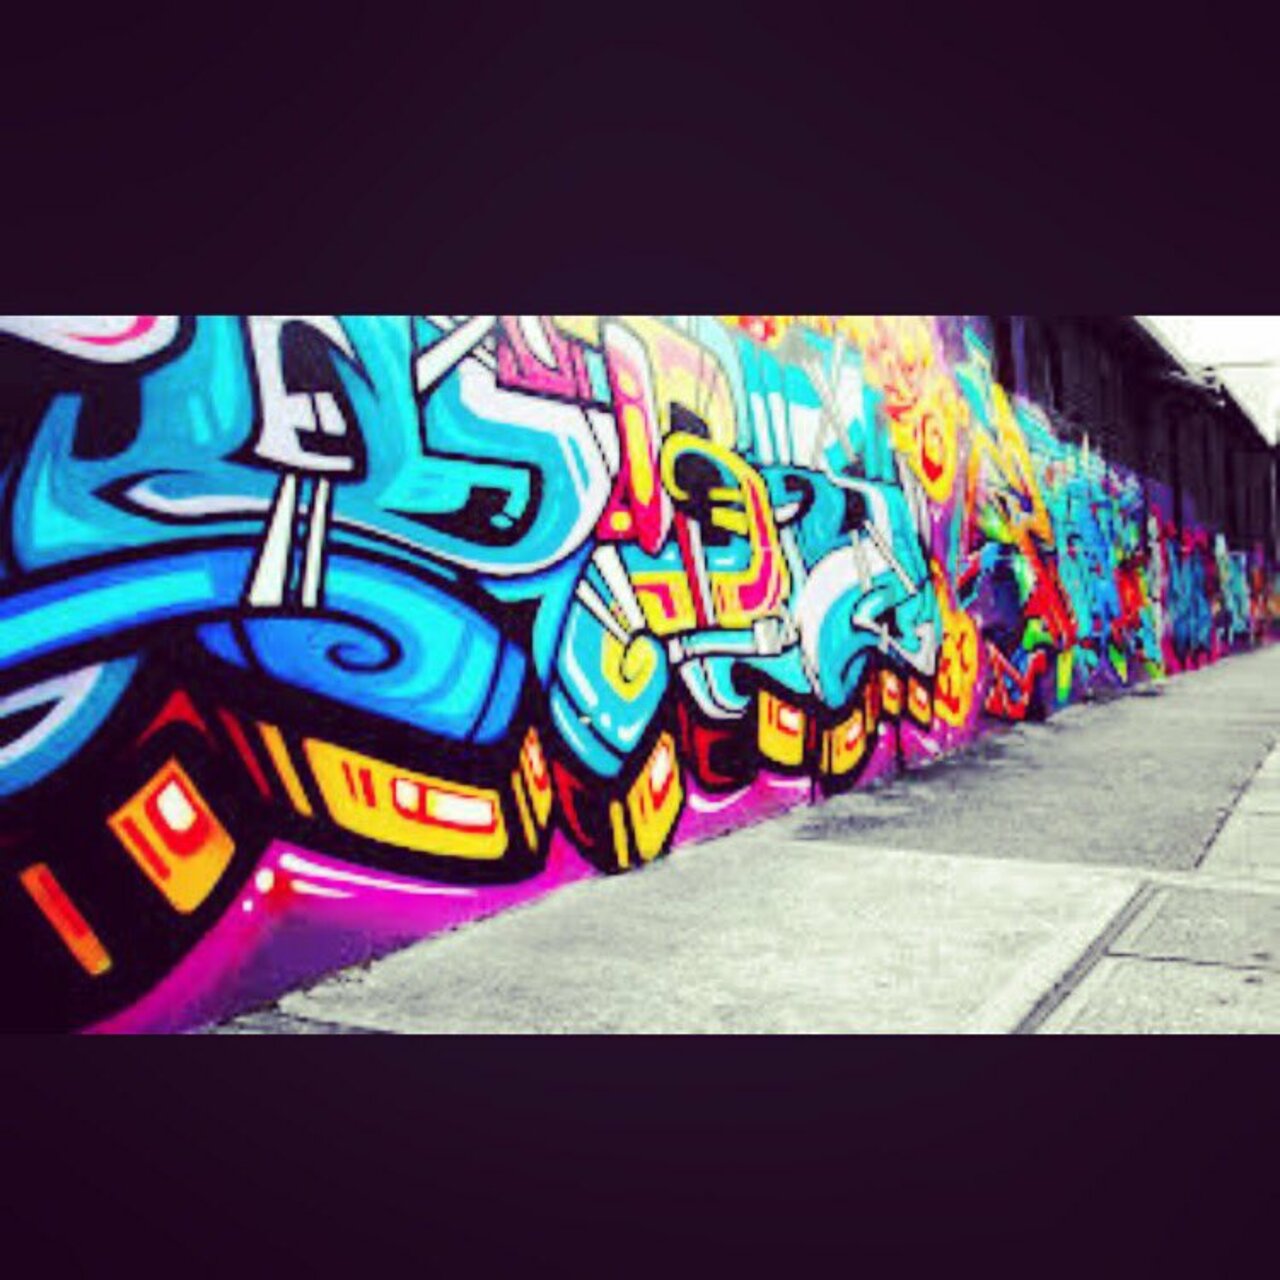 Happy Friday! #TGIF #ArtWall #Graffiti #GraffitiWall #Art #Artist #PhotoWall #Photoshoot #StreetArt #StreetDesign https://t.co/S3zUVlblf1